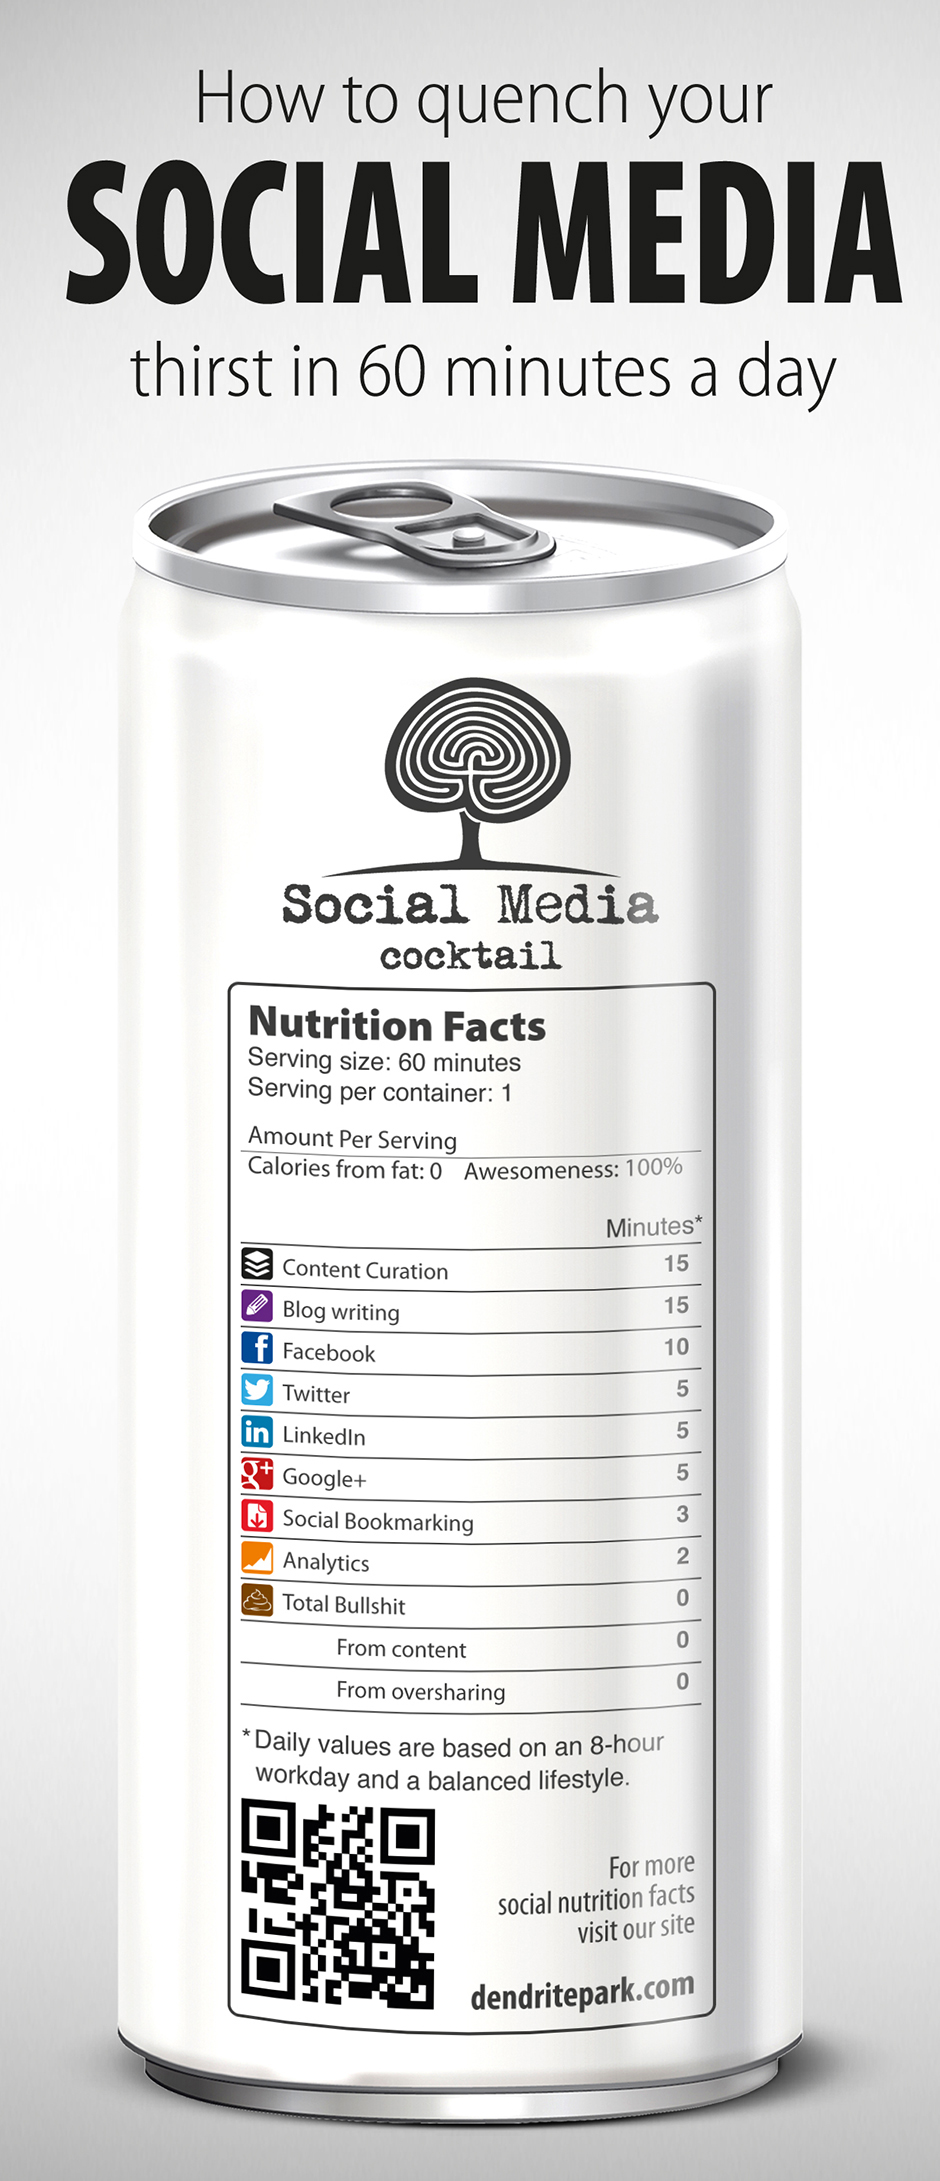 social-media-cocktail1